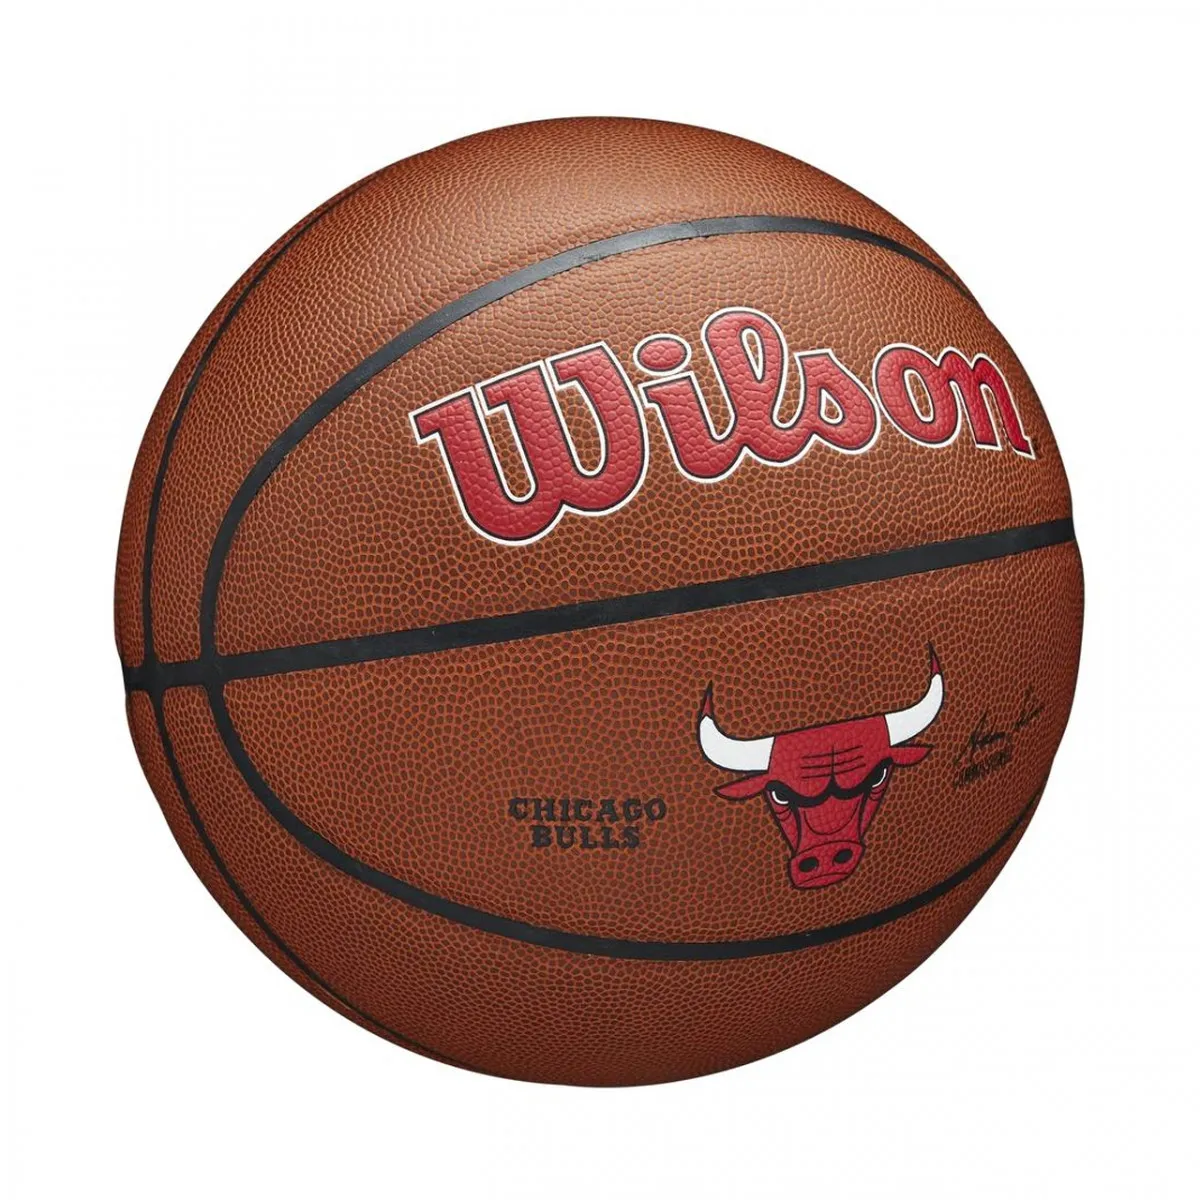 Баскетбольный мяч Wilson red bulls#1